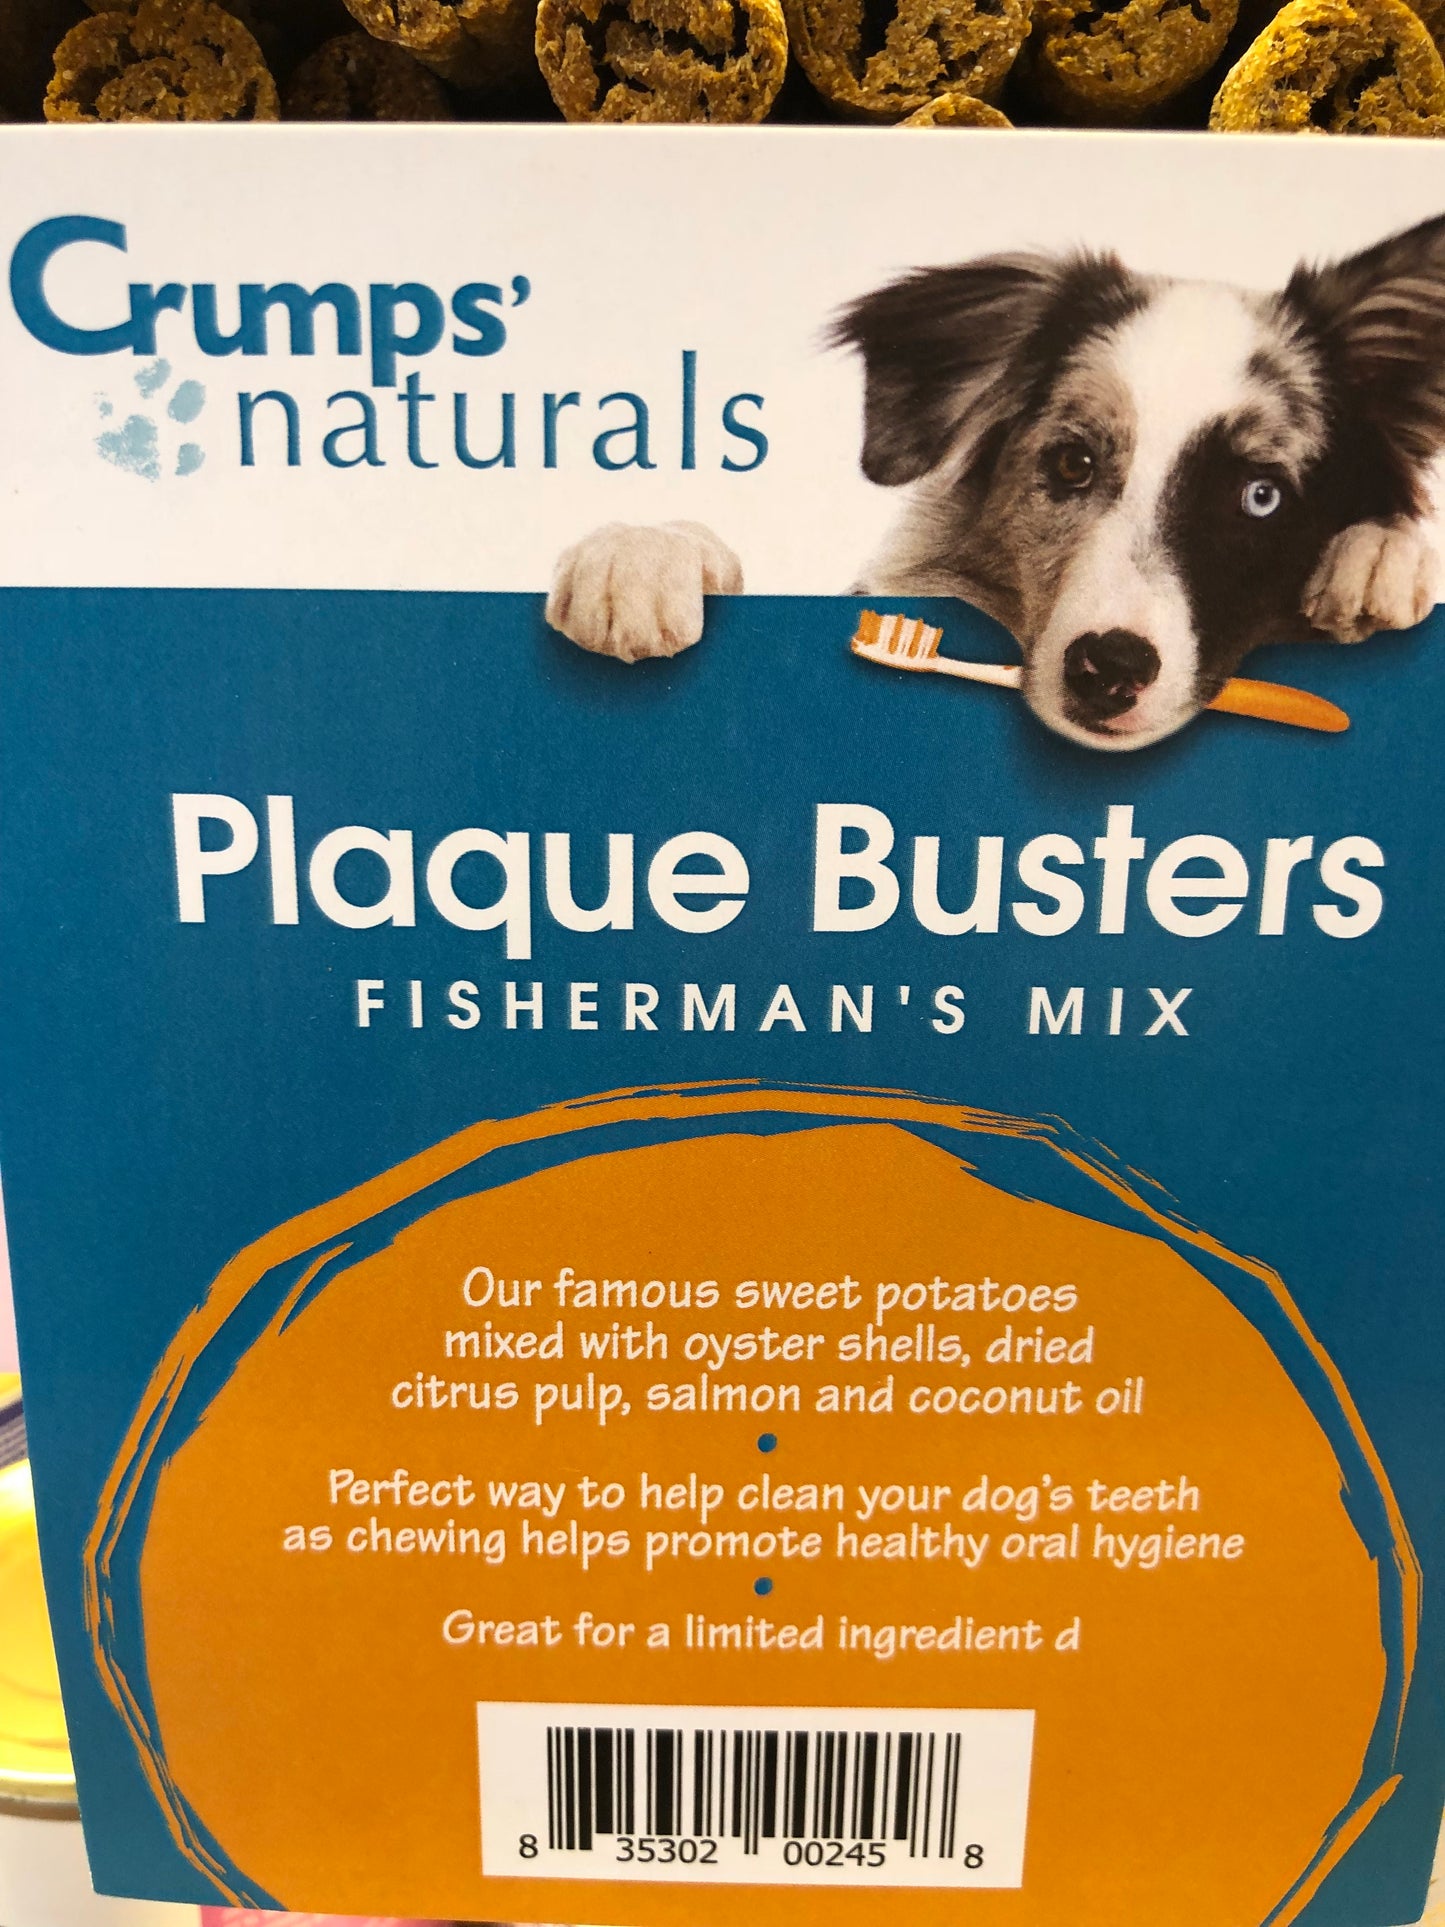 Crumps' Naturals Plaque Busters Fisherman's Mix